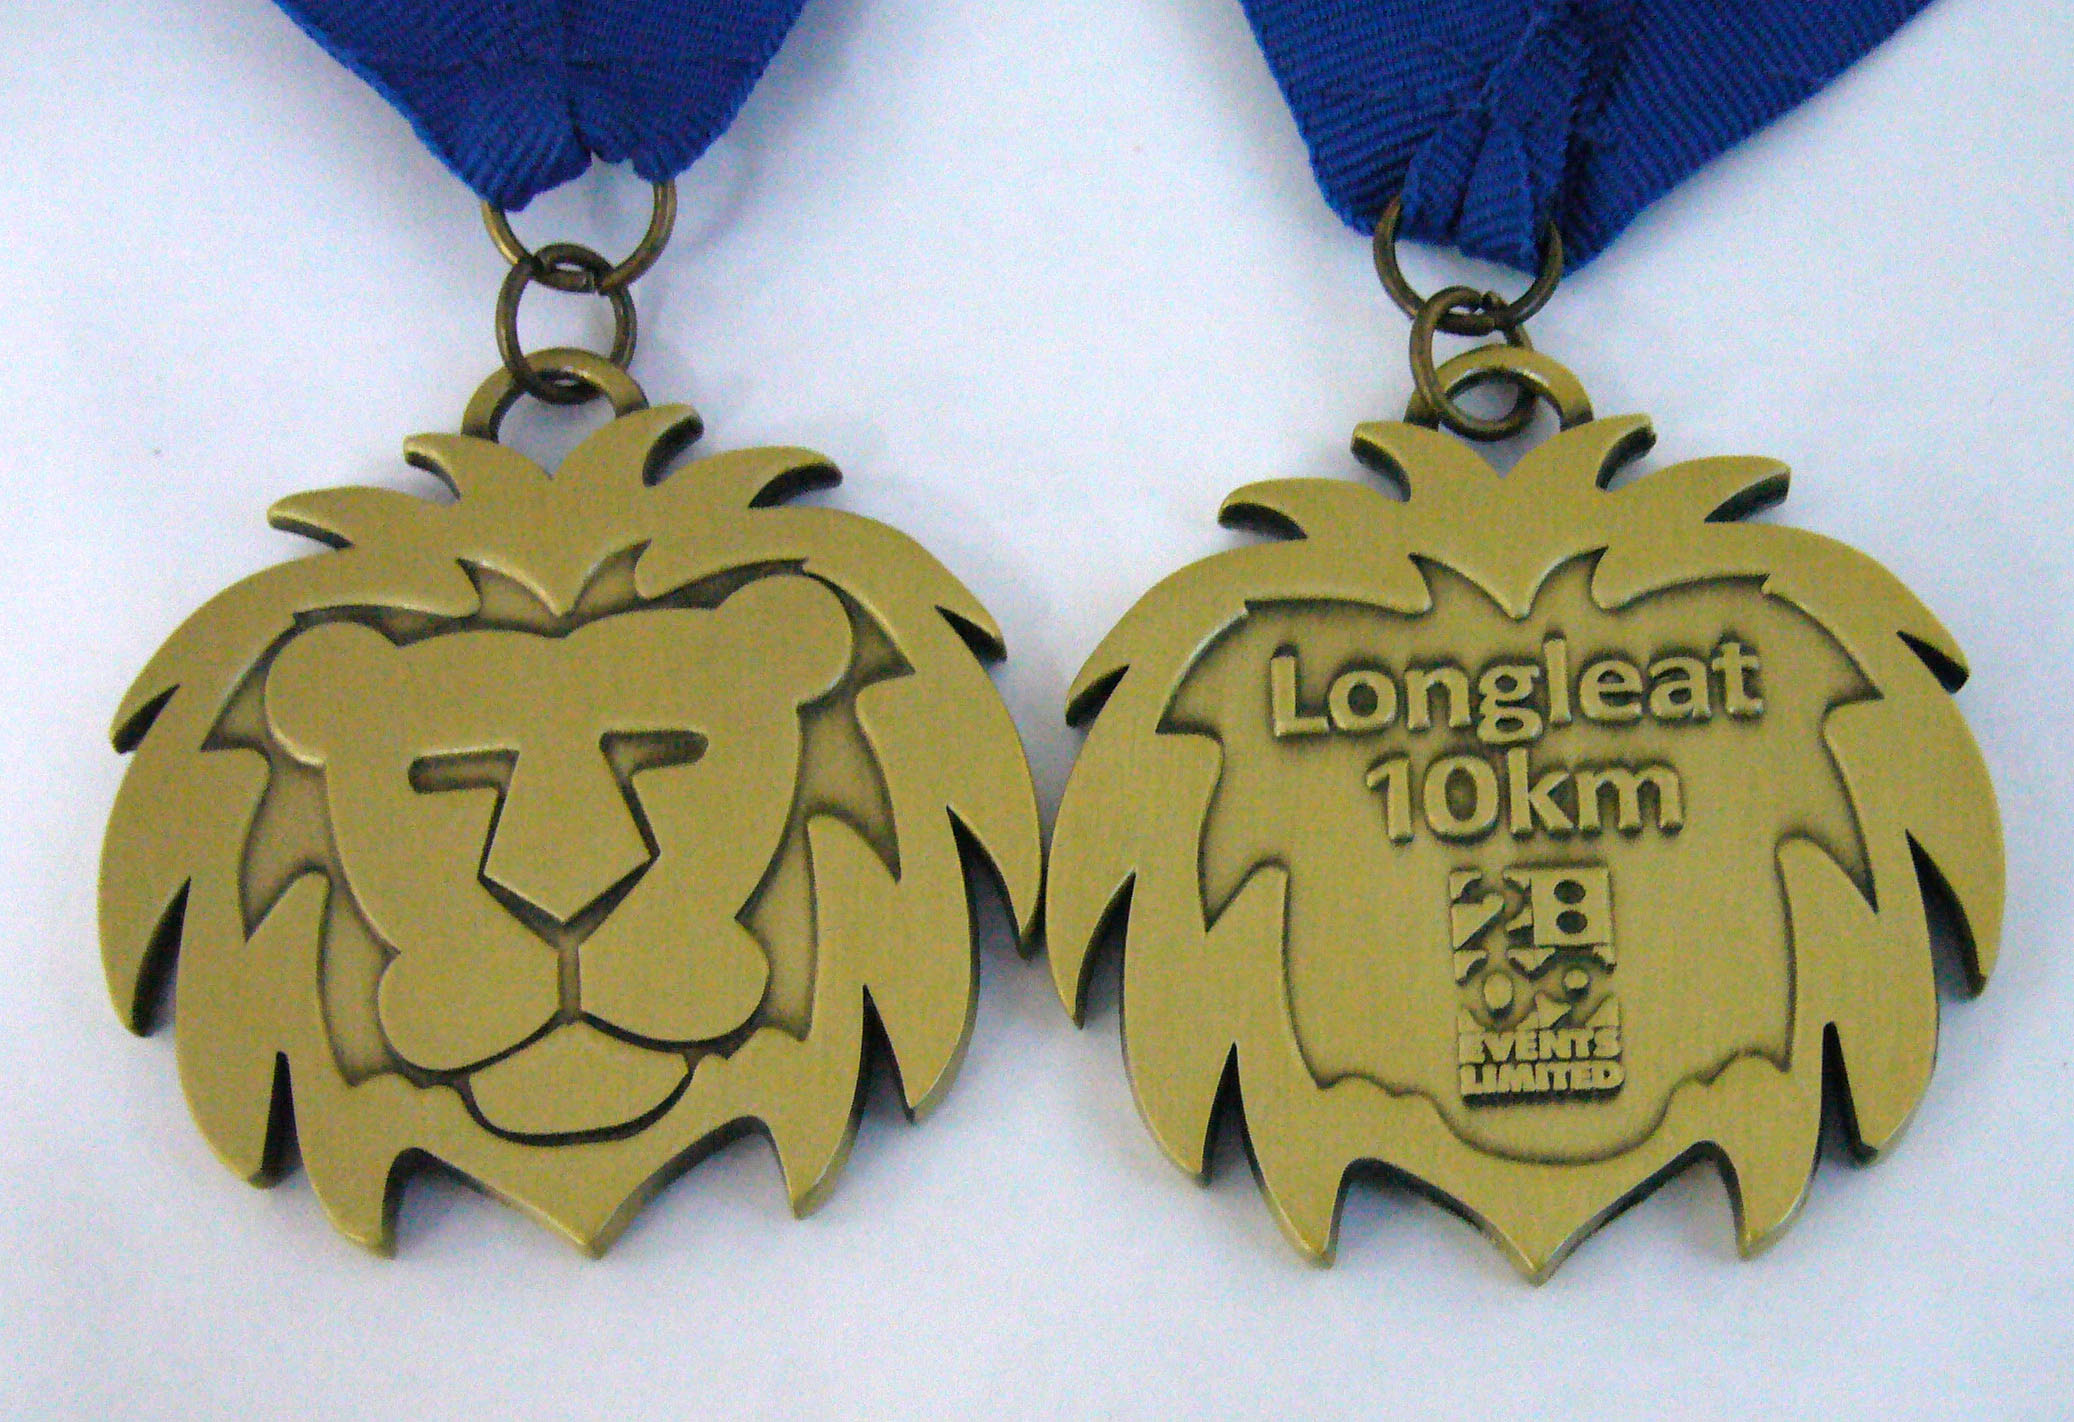 Longleat-Lionheart-Cyclosportive